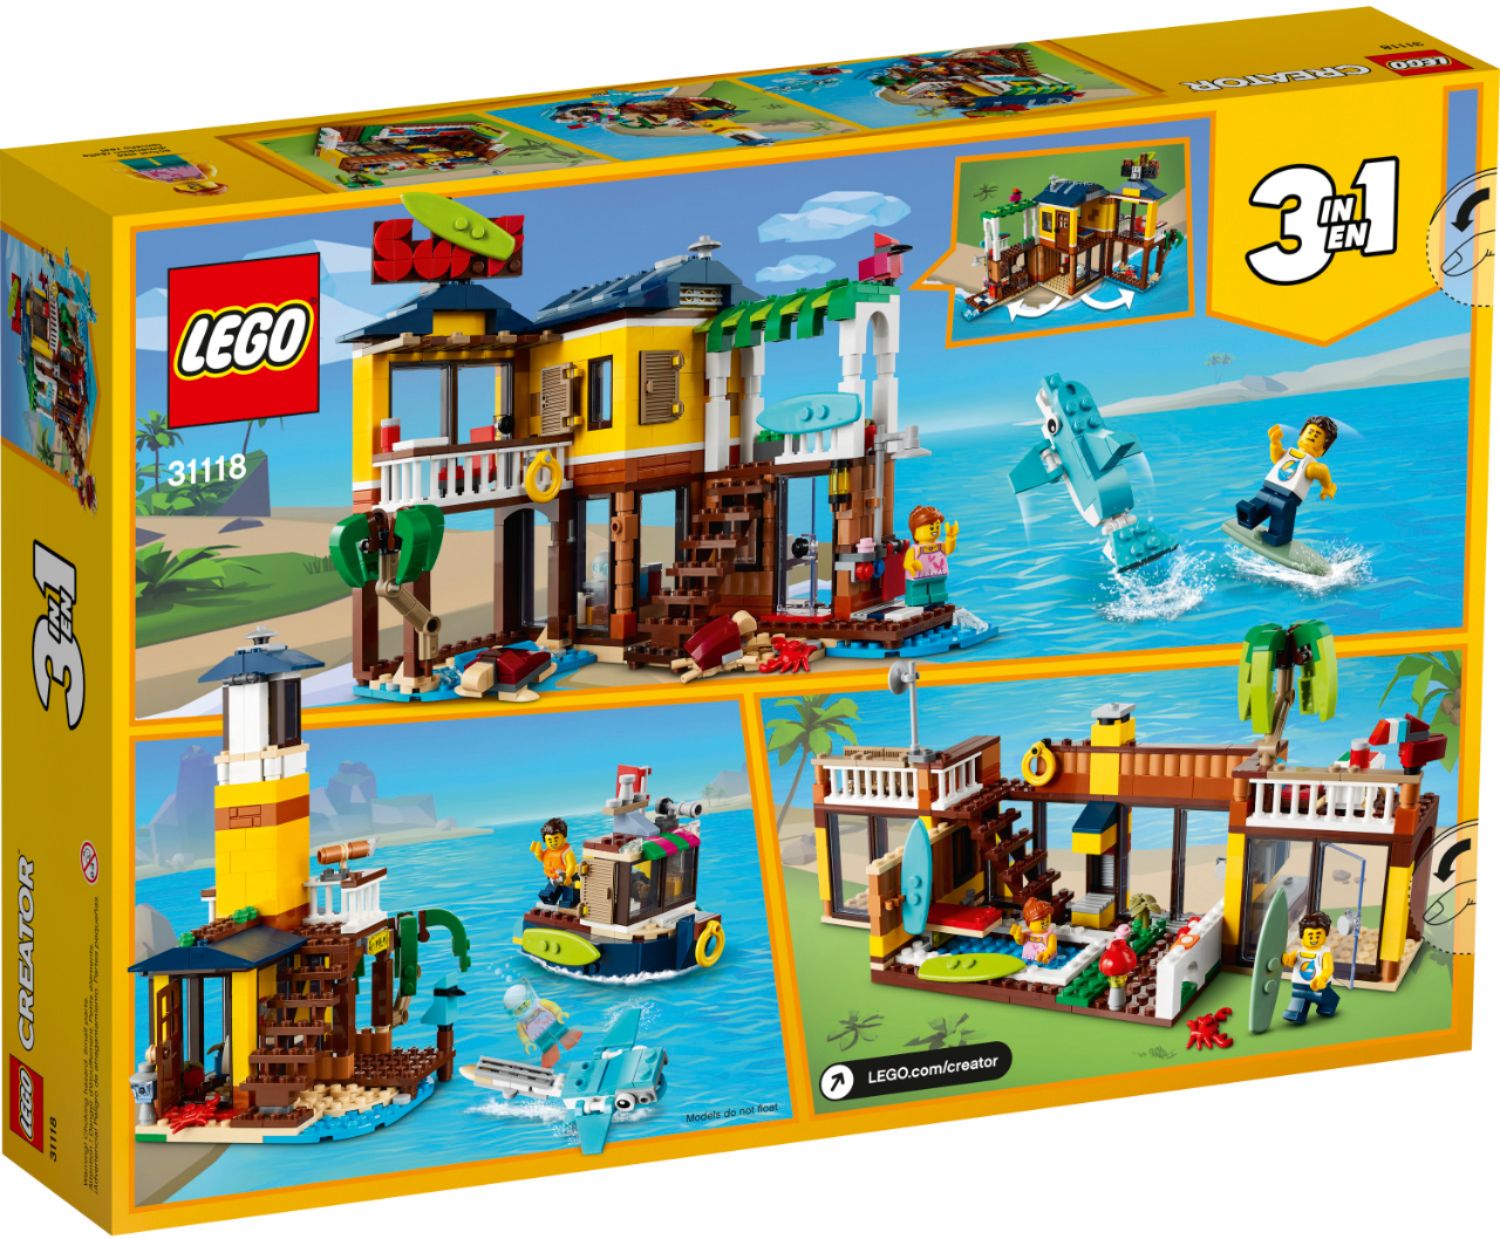 LEGO 3in1 Surfer Beach House 31118 6327664 Buy